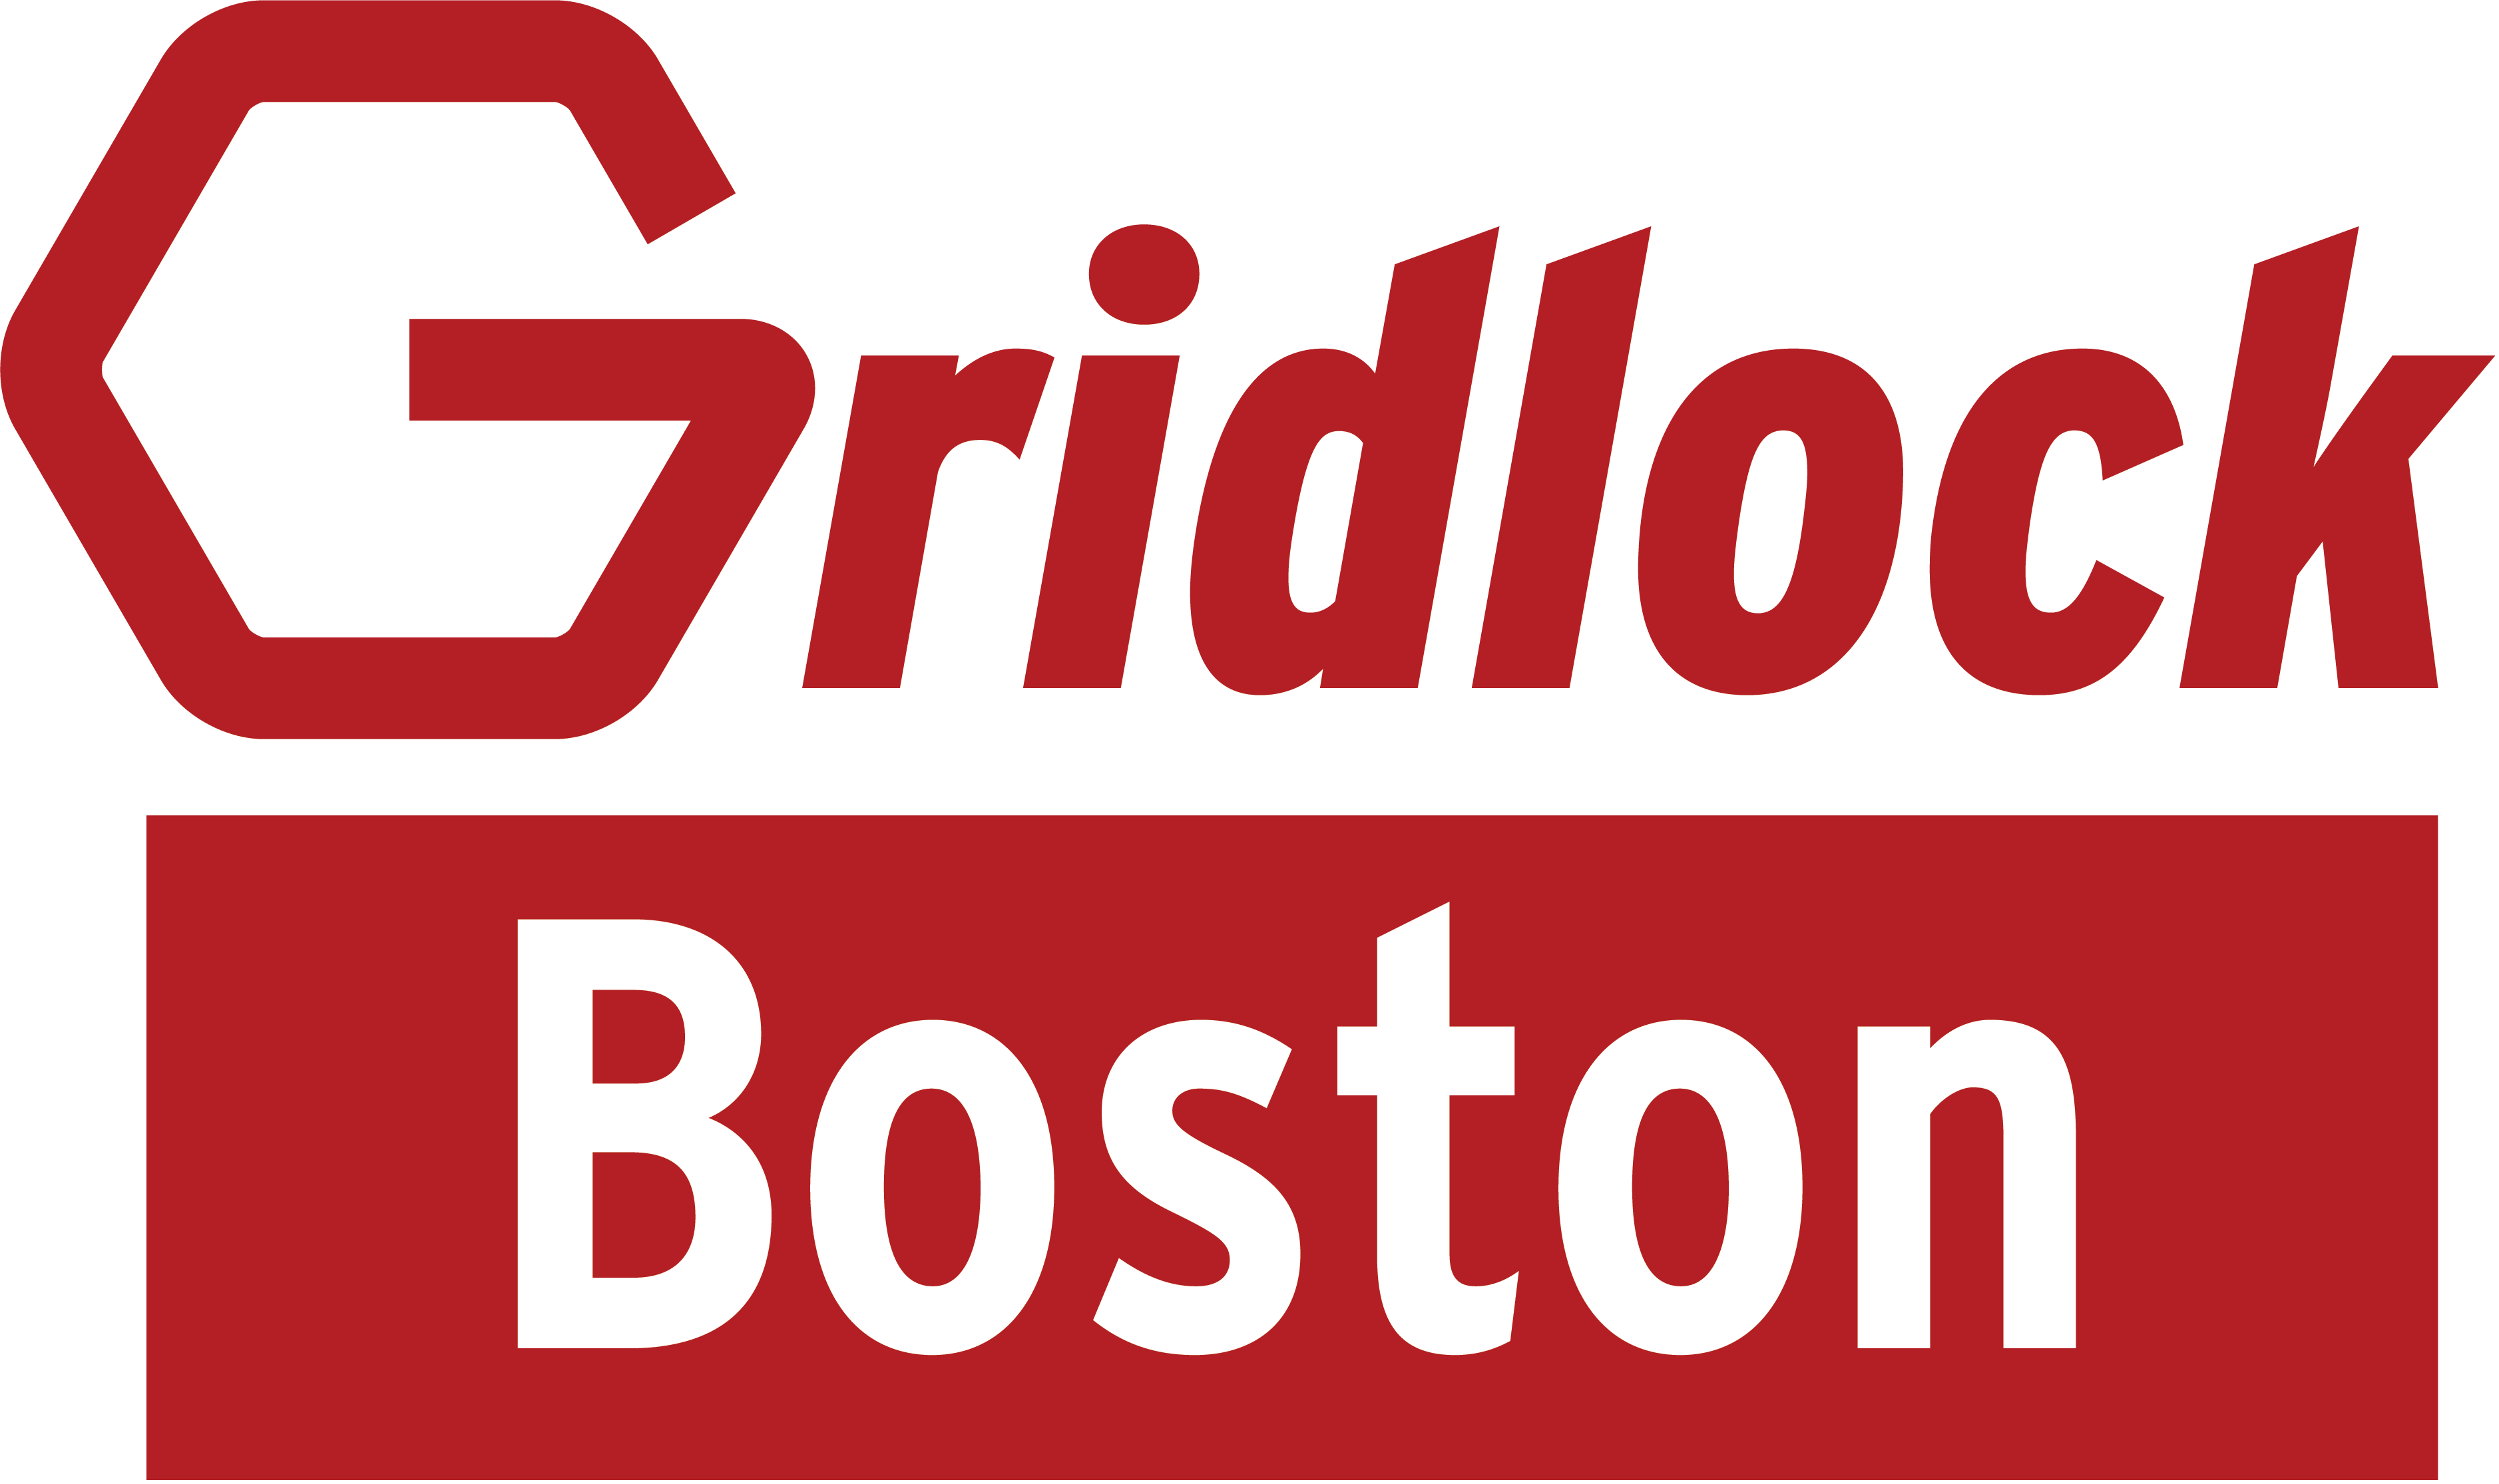 Gridlock: Boston